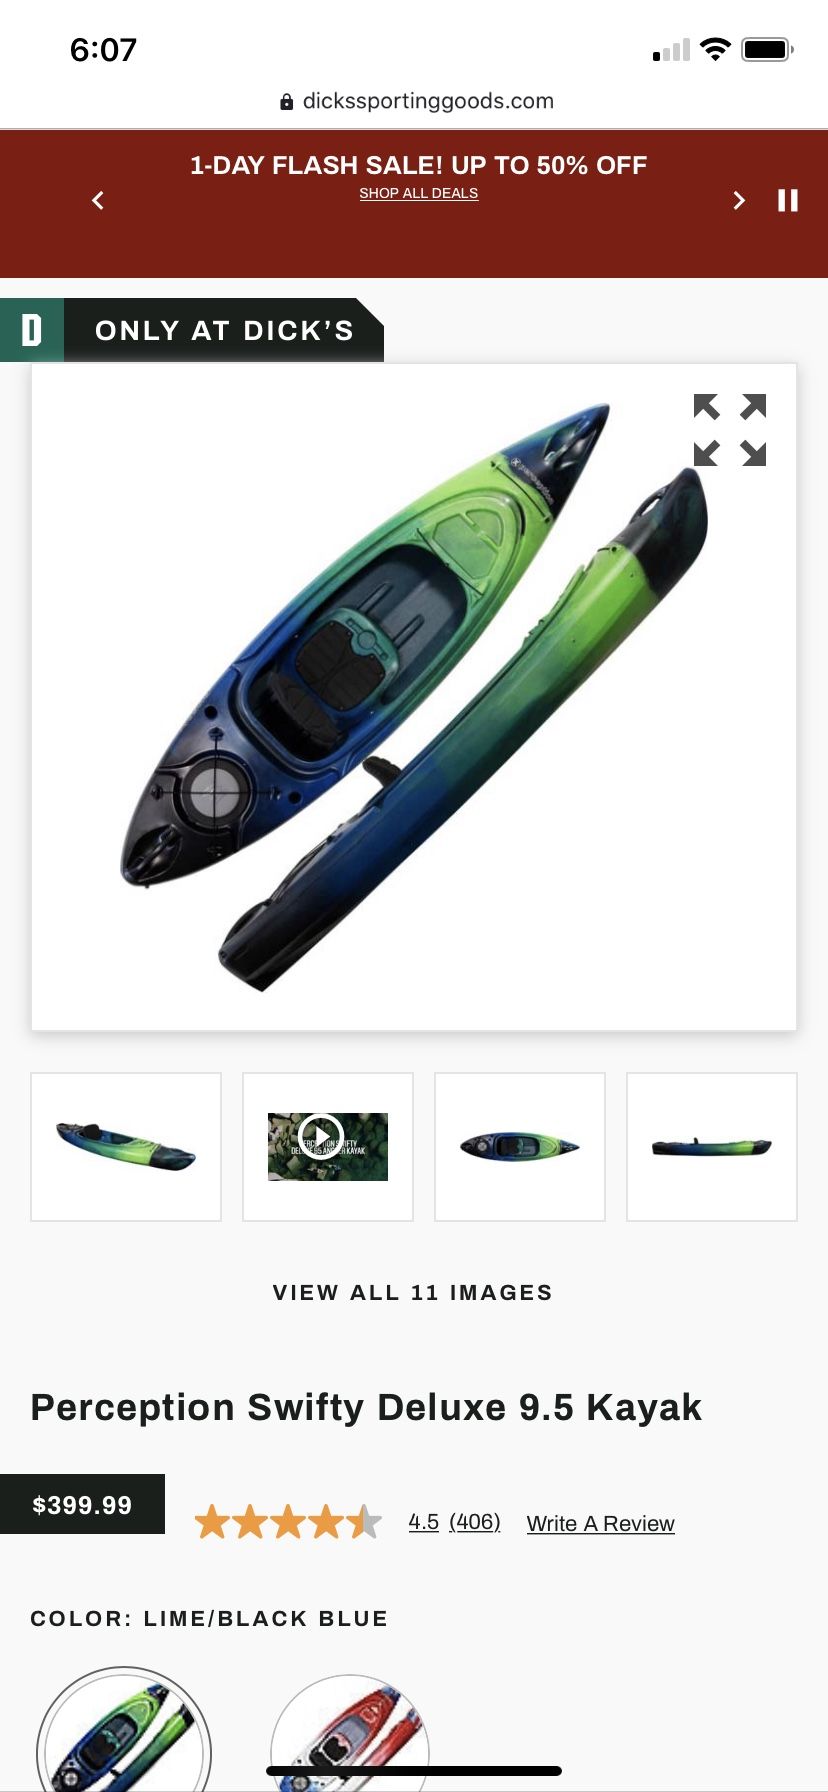 2 new kayaks